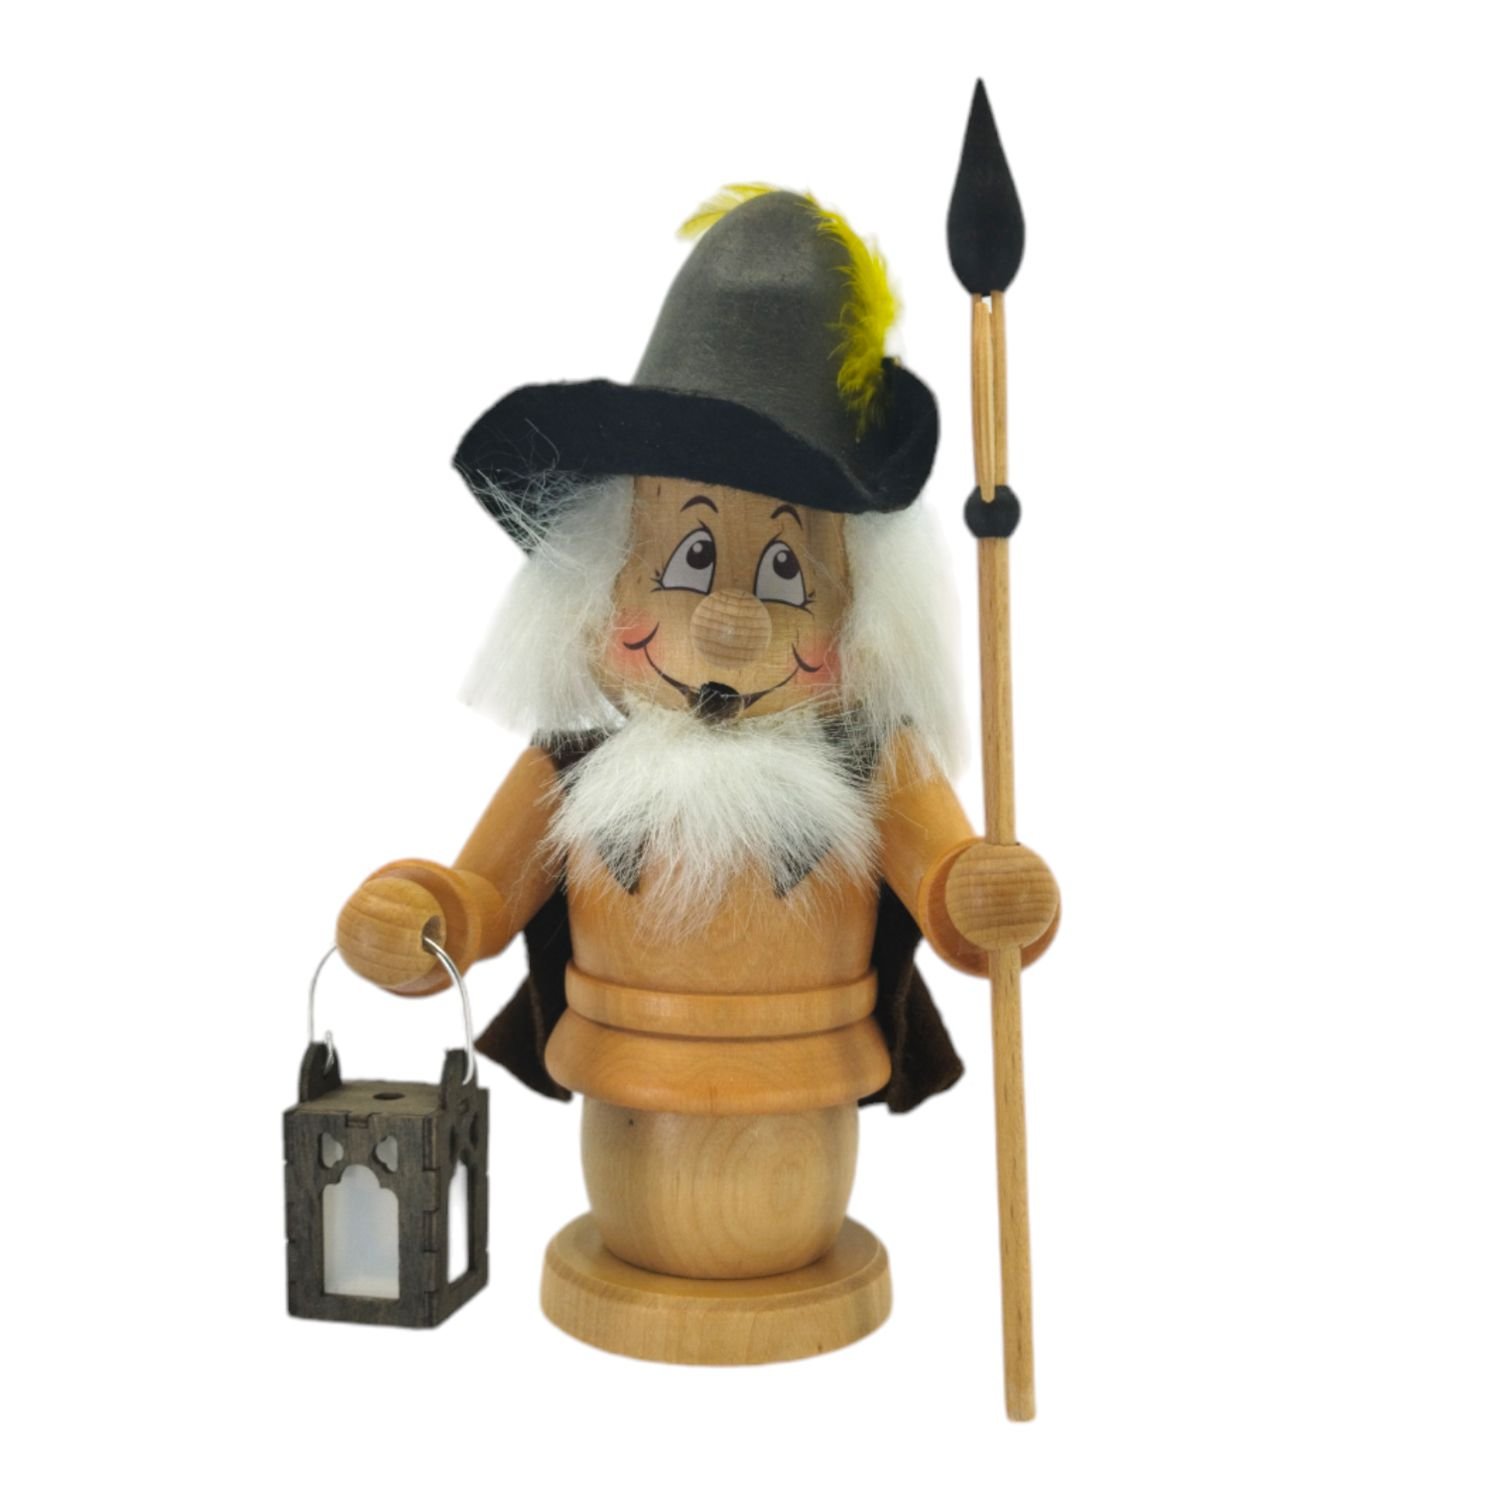 Incense figure gnome night watchman